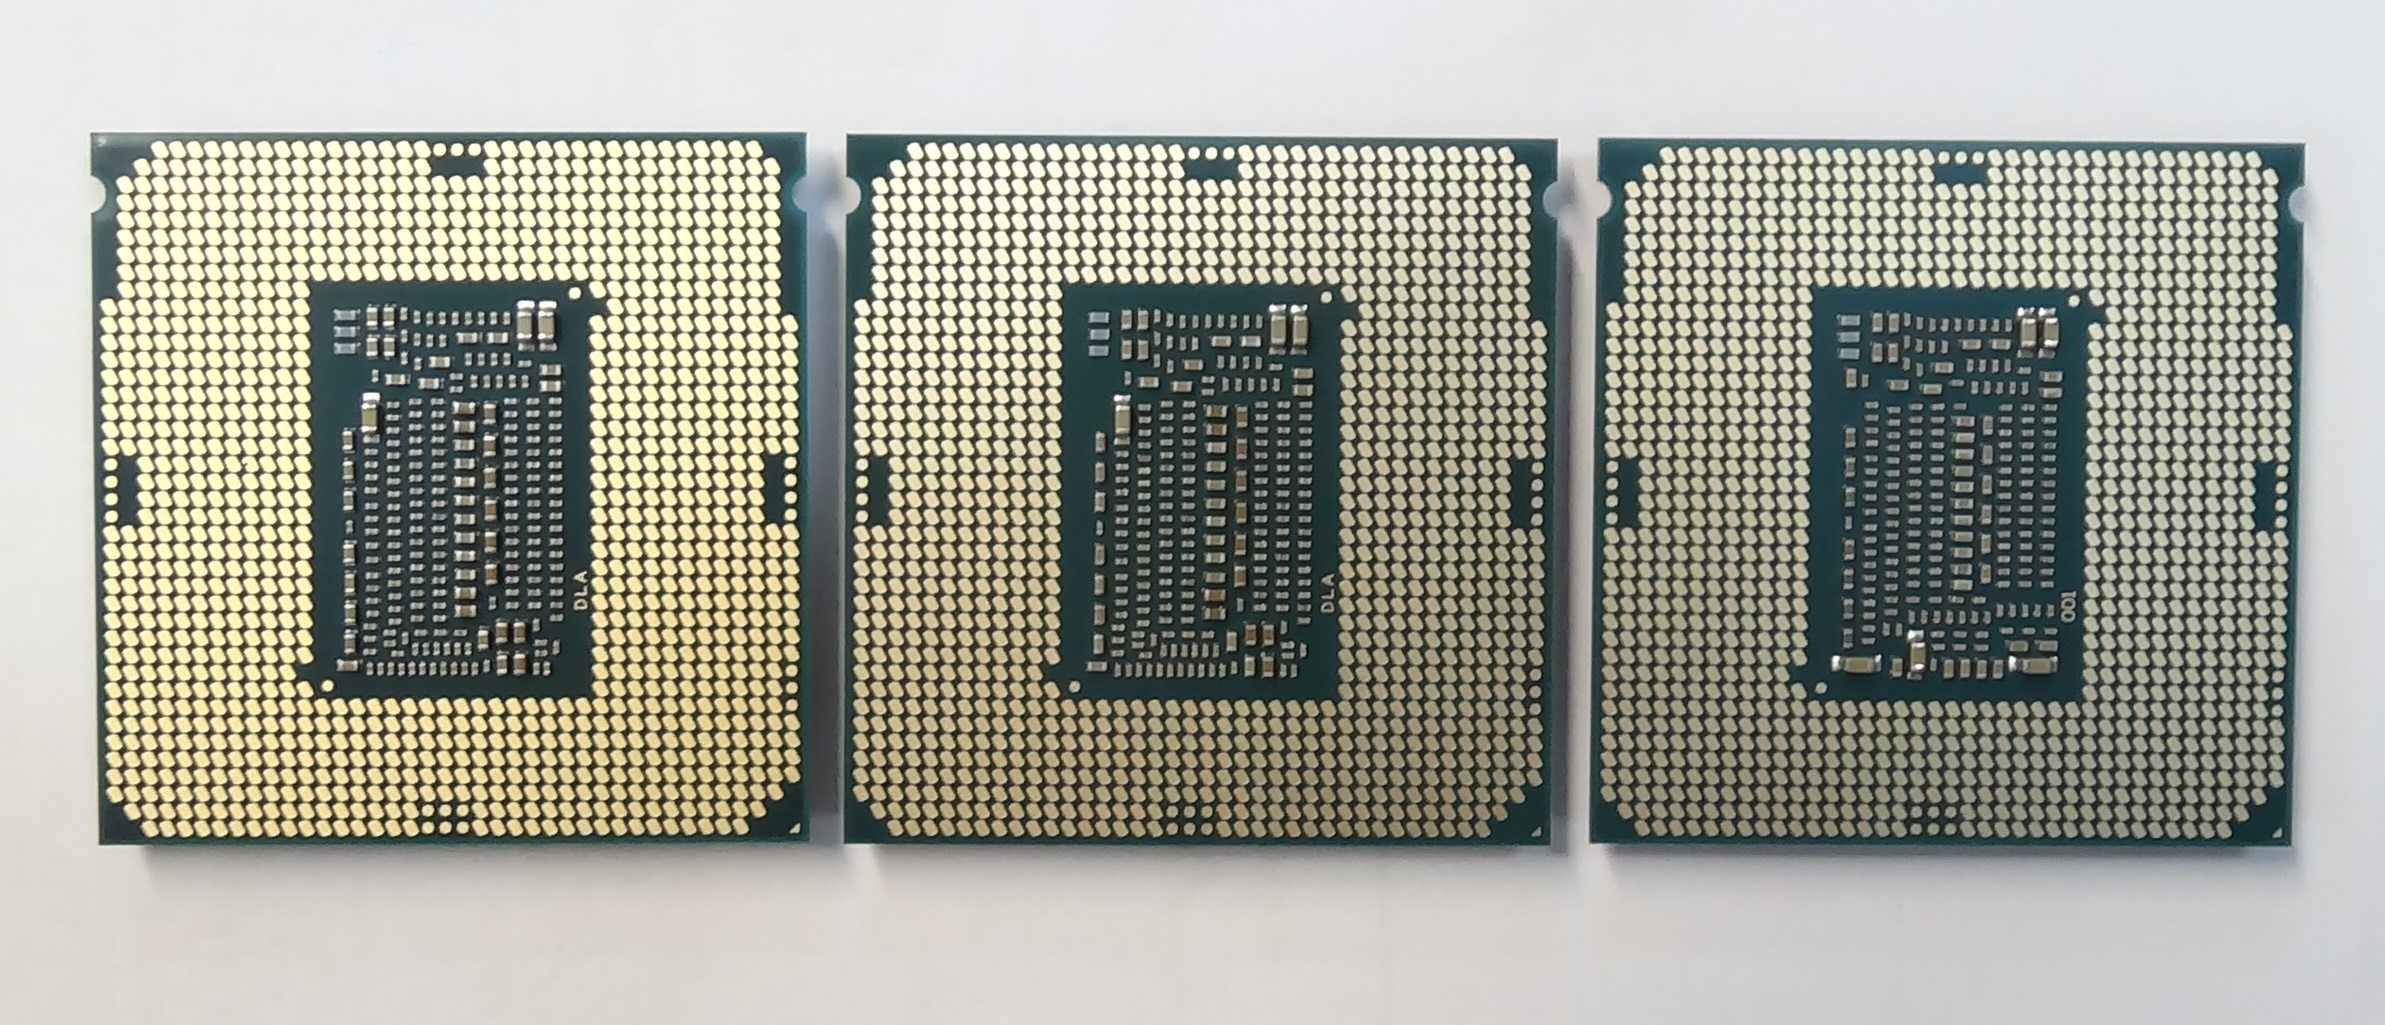 Core i9-9900K Core i7-9700K Core i5-9600K ベンチマークレビュー 